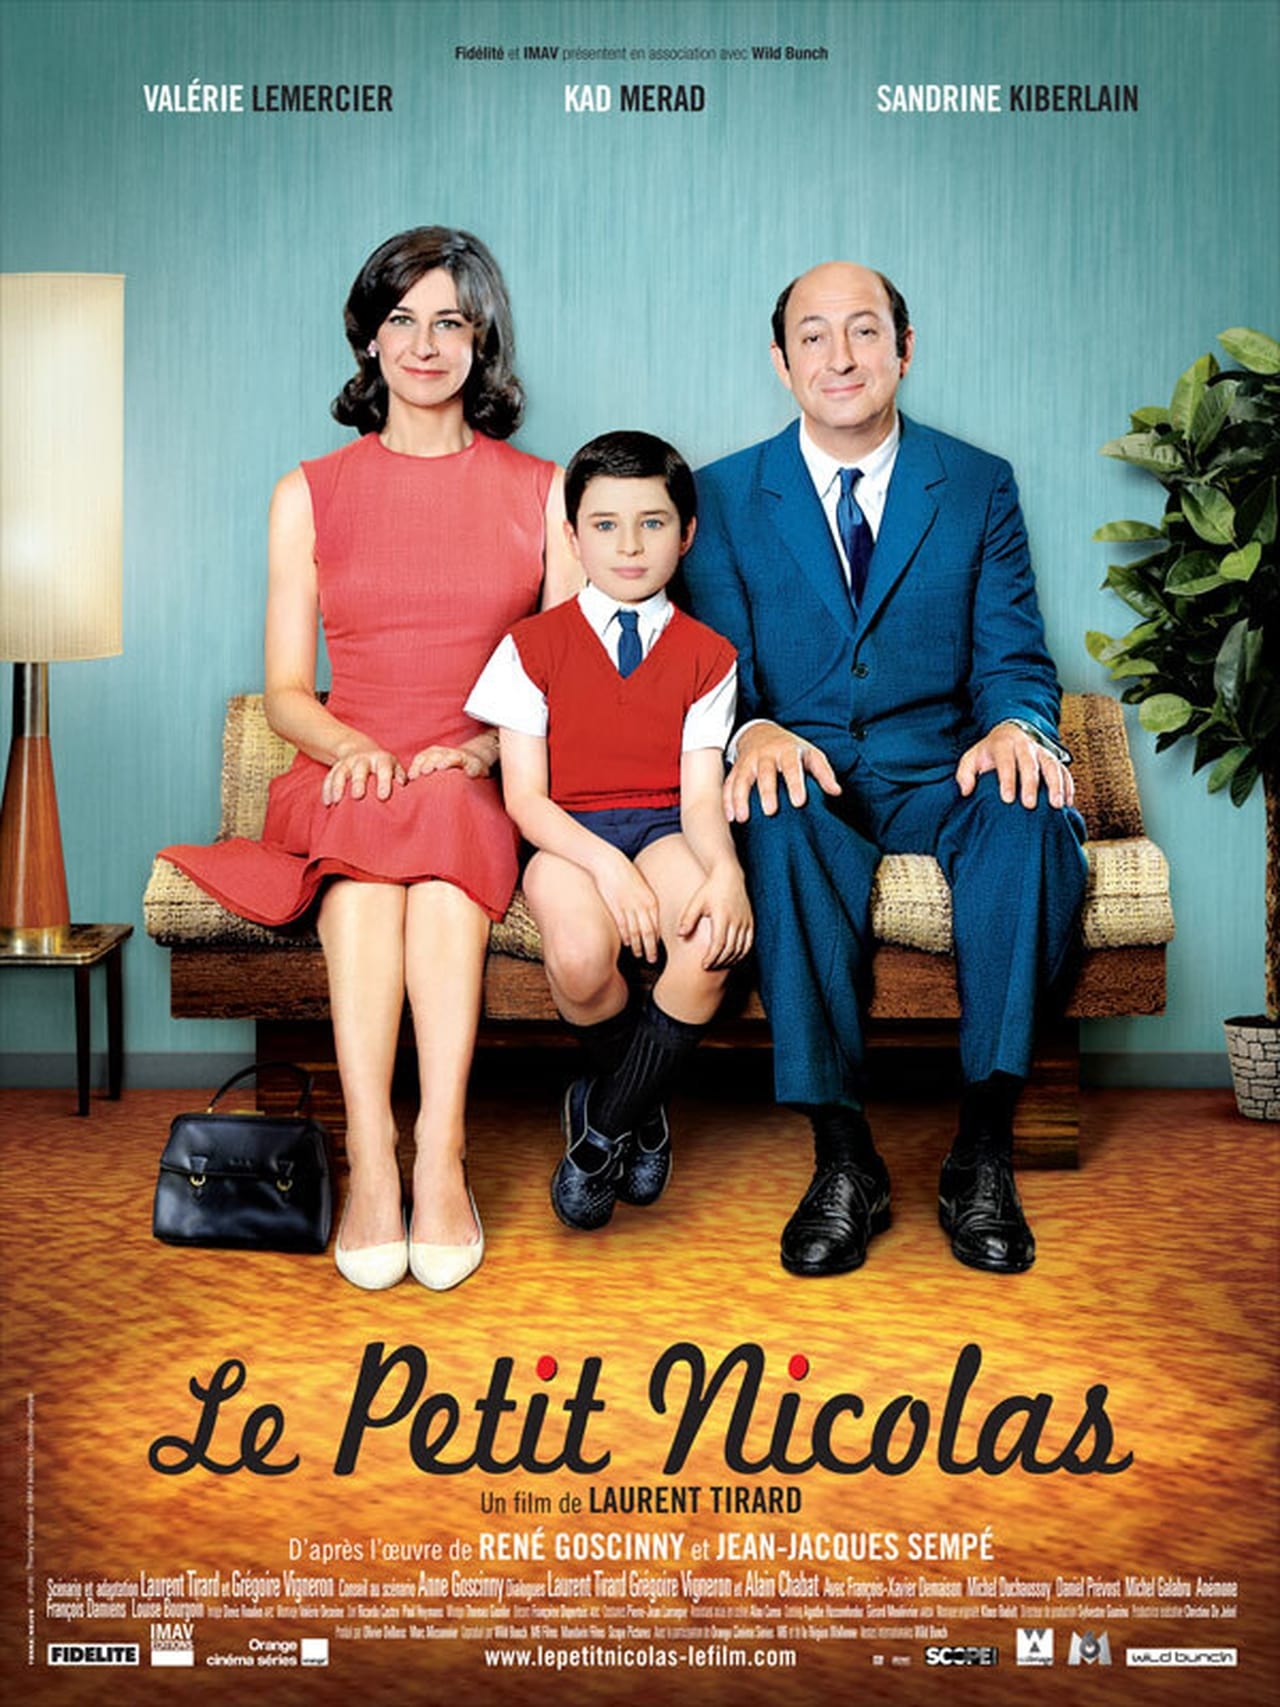 FR - Le Petit Nicolas (2009) - KAD MERAD